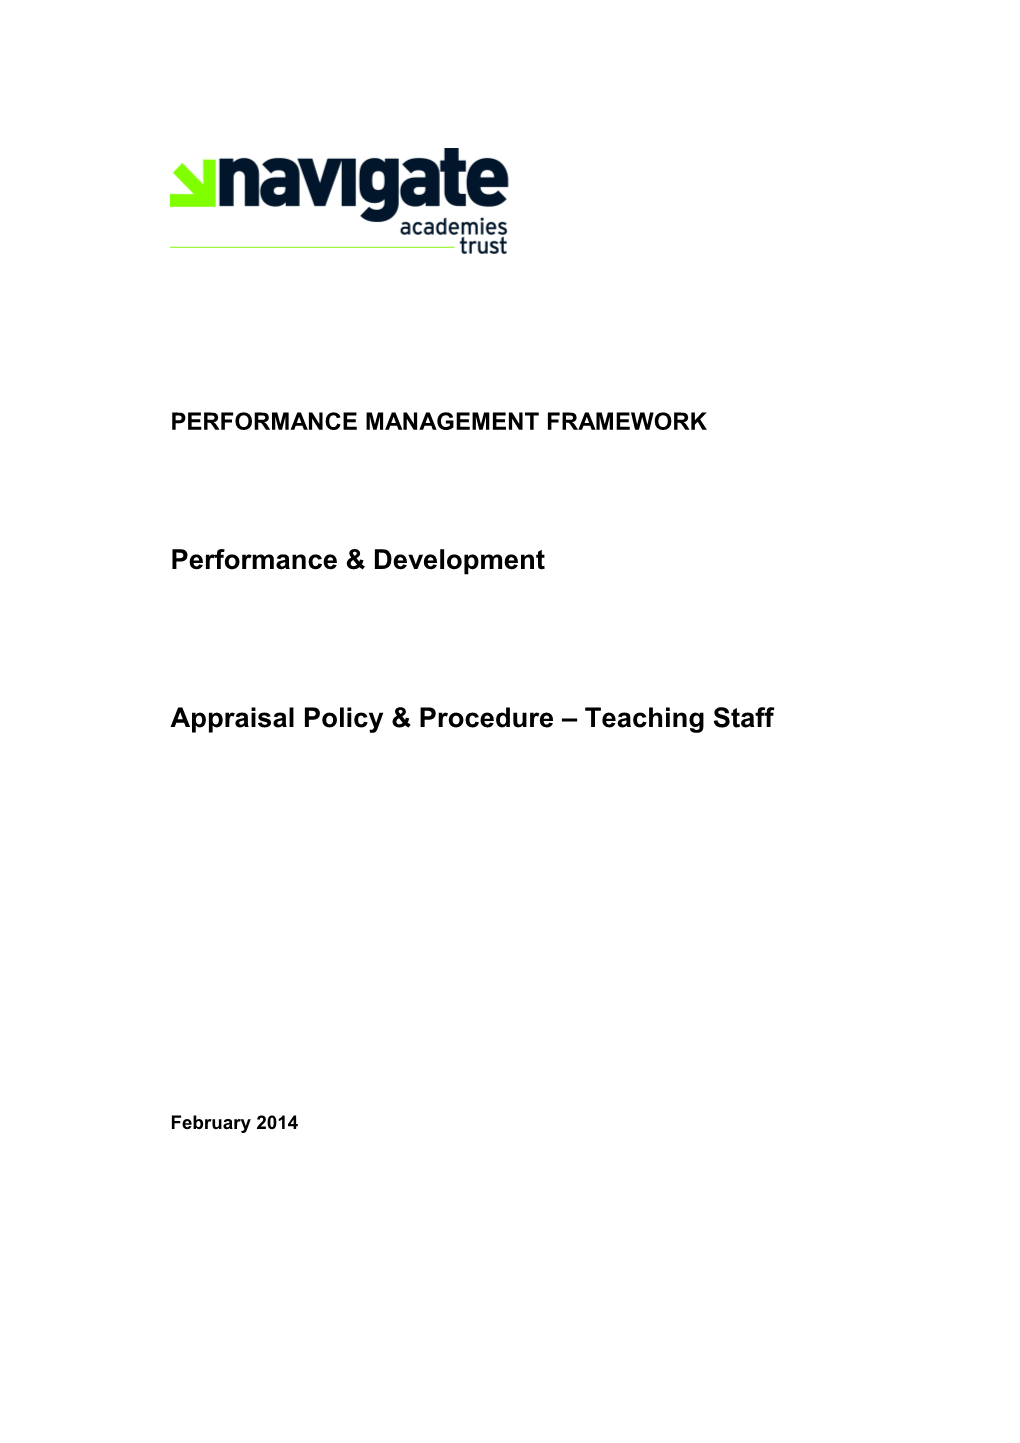 Appraisal Policy & Procedure Teaching Staff